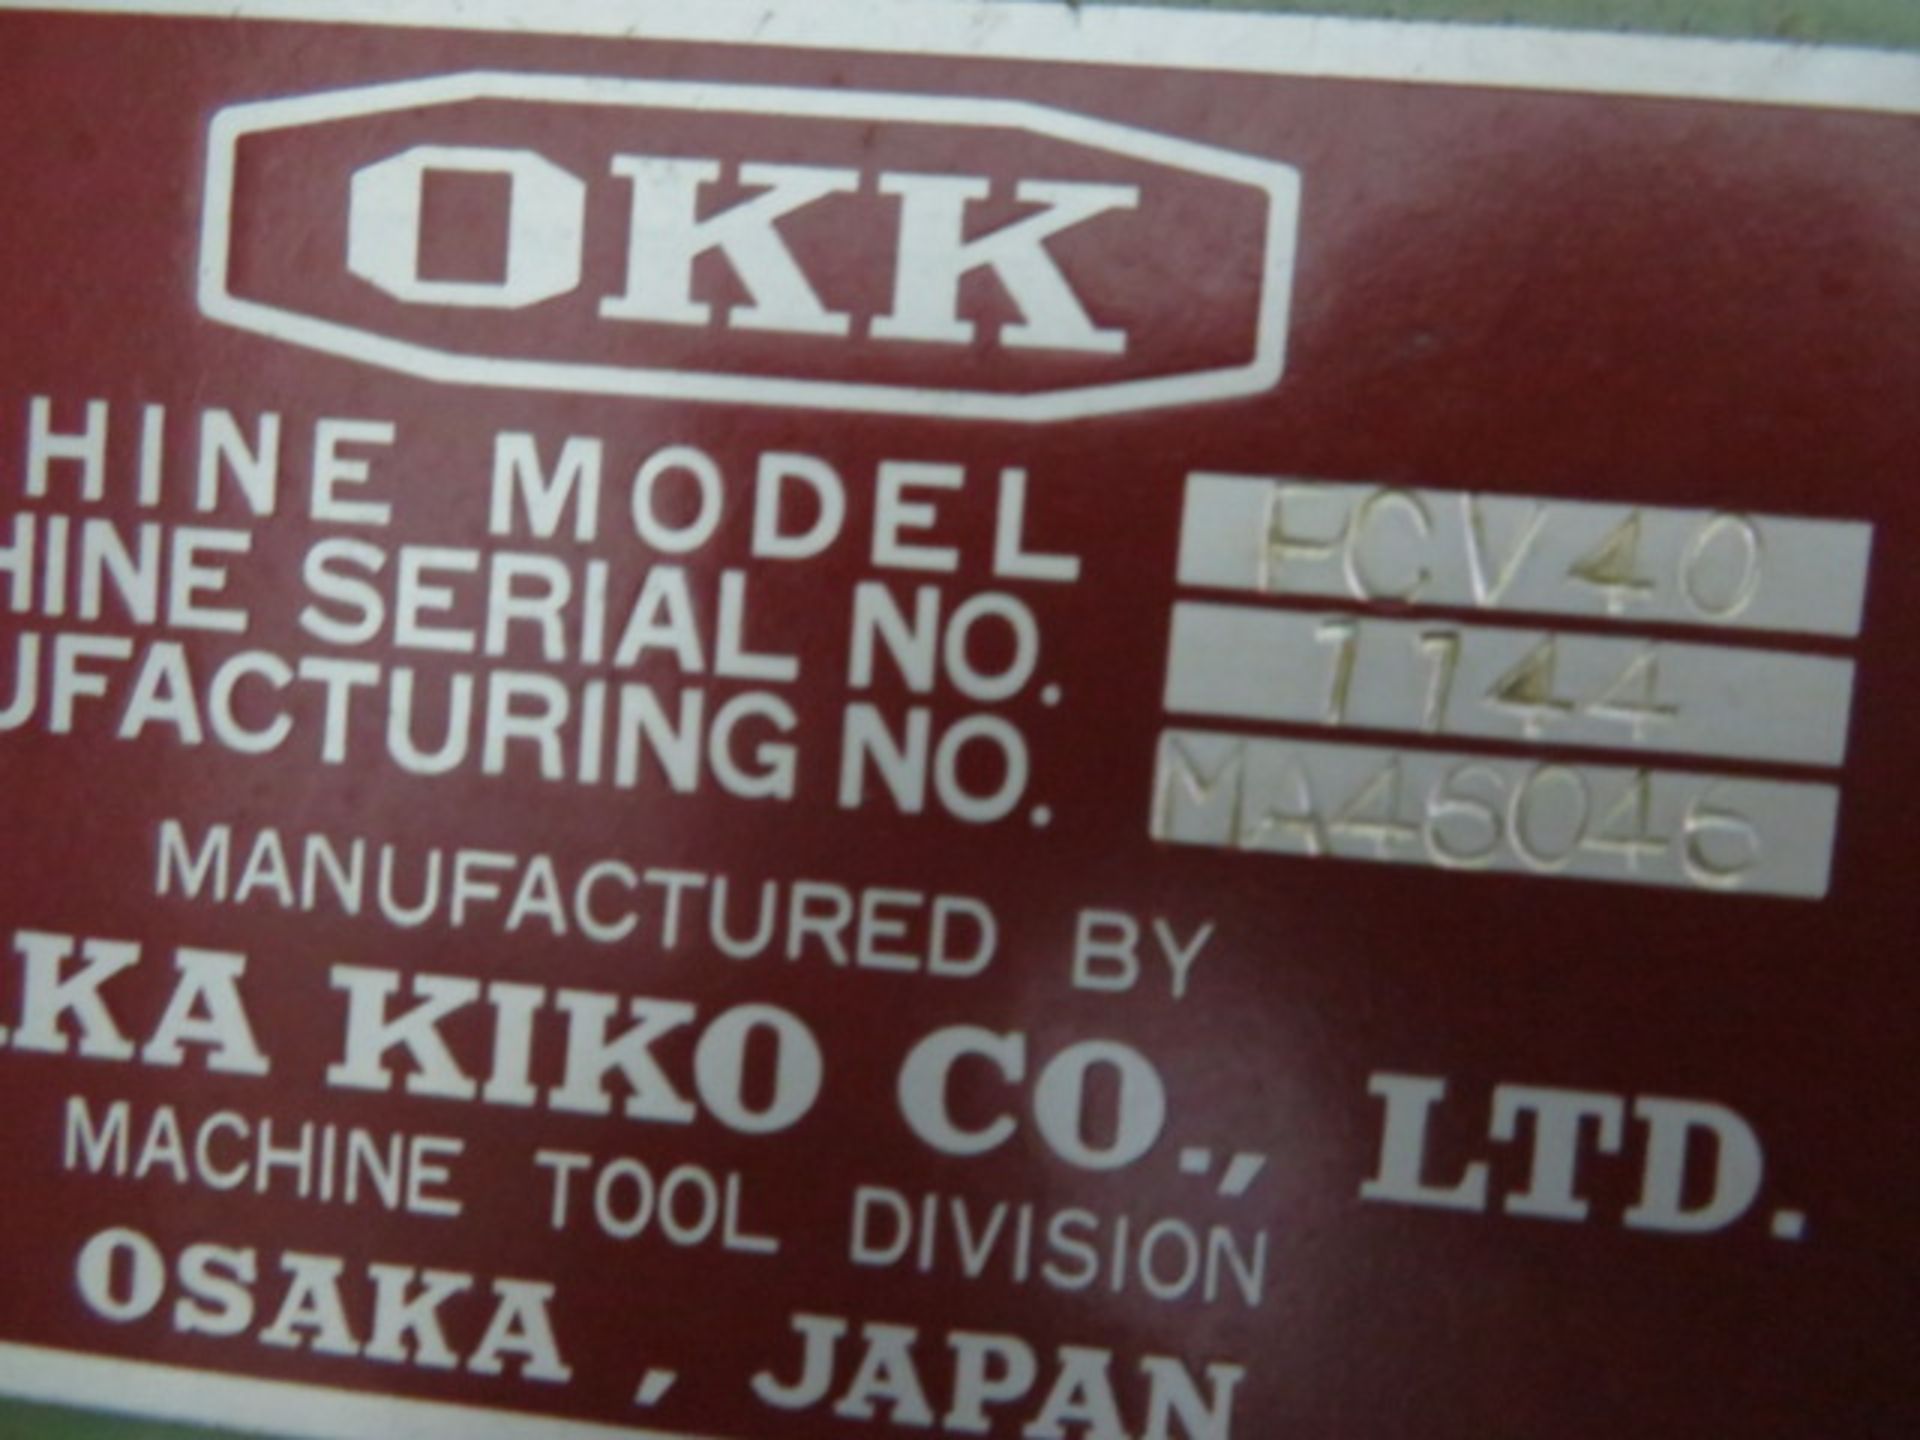 OKK PCV-40 CNC VERTICAL MACHINING CENTER, S/N 1144/MA46046 (8,000 RPM), MELDAS 300 CNC CONTROL - Image 5 of 5